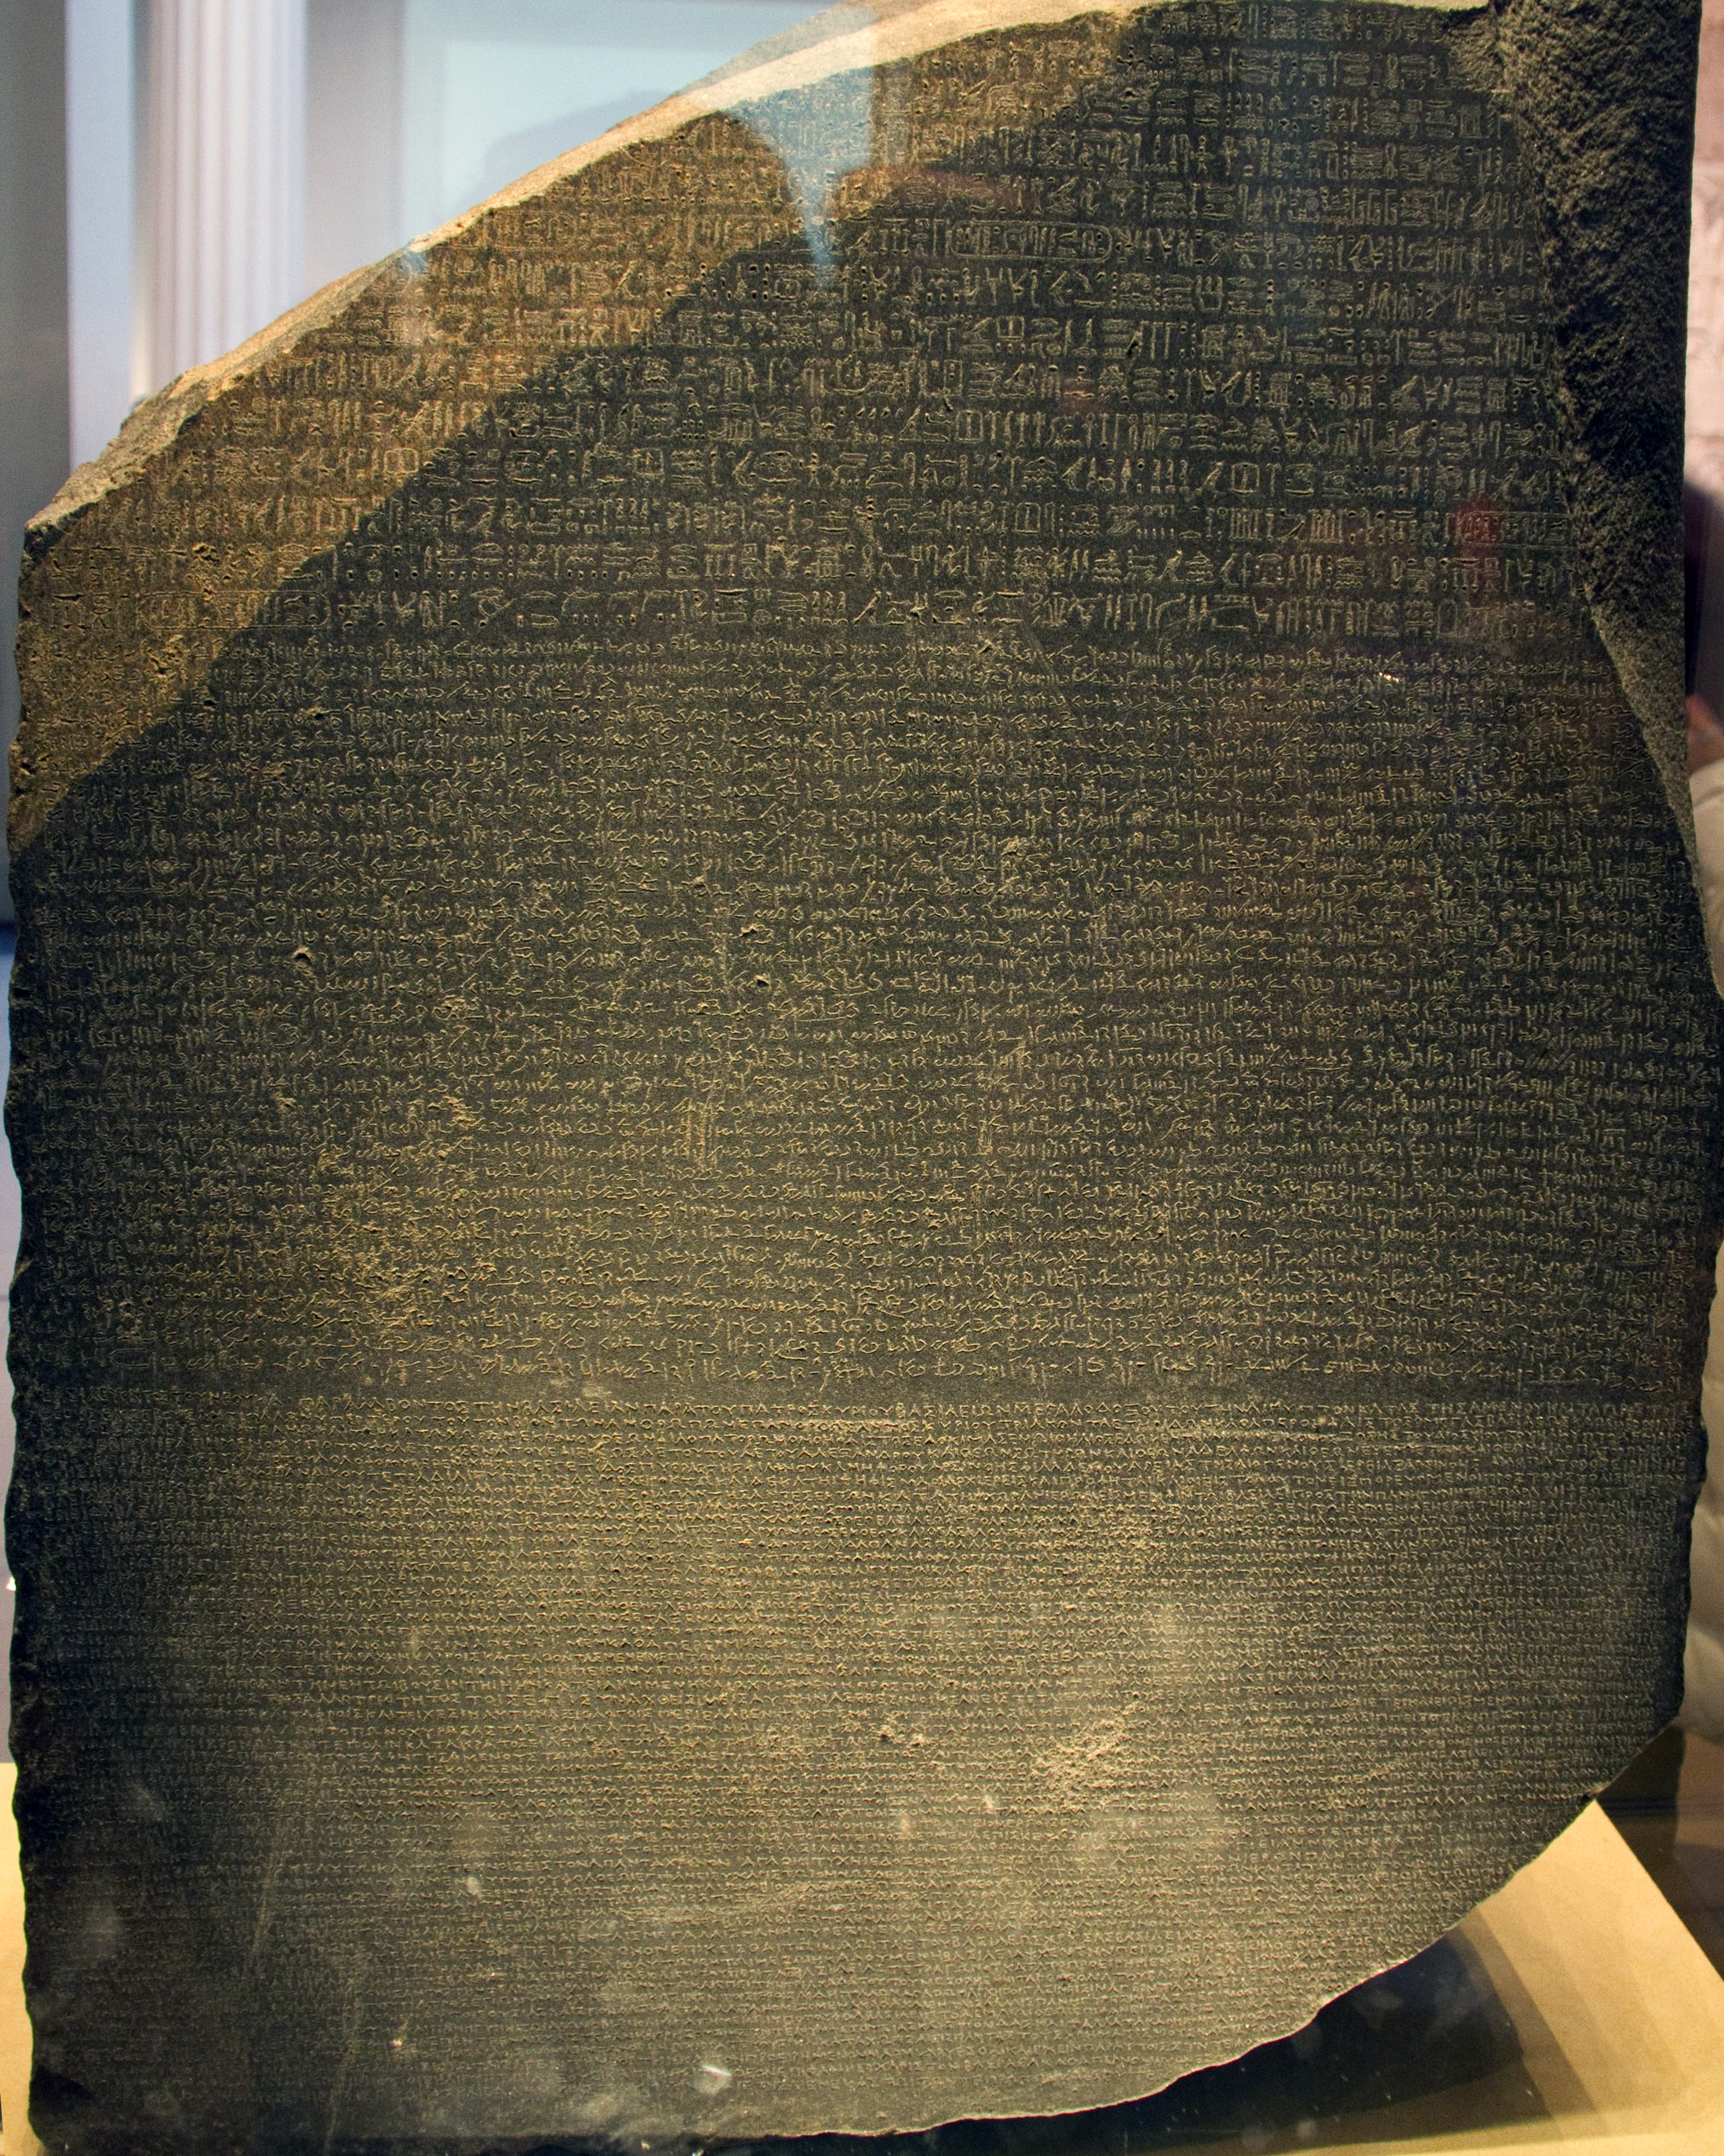 Rosetta Stone (6488613003)